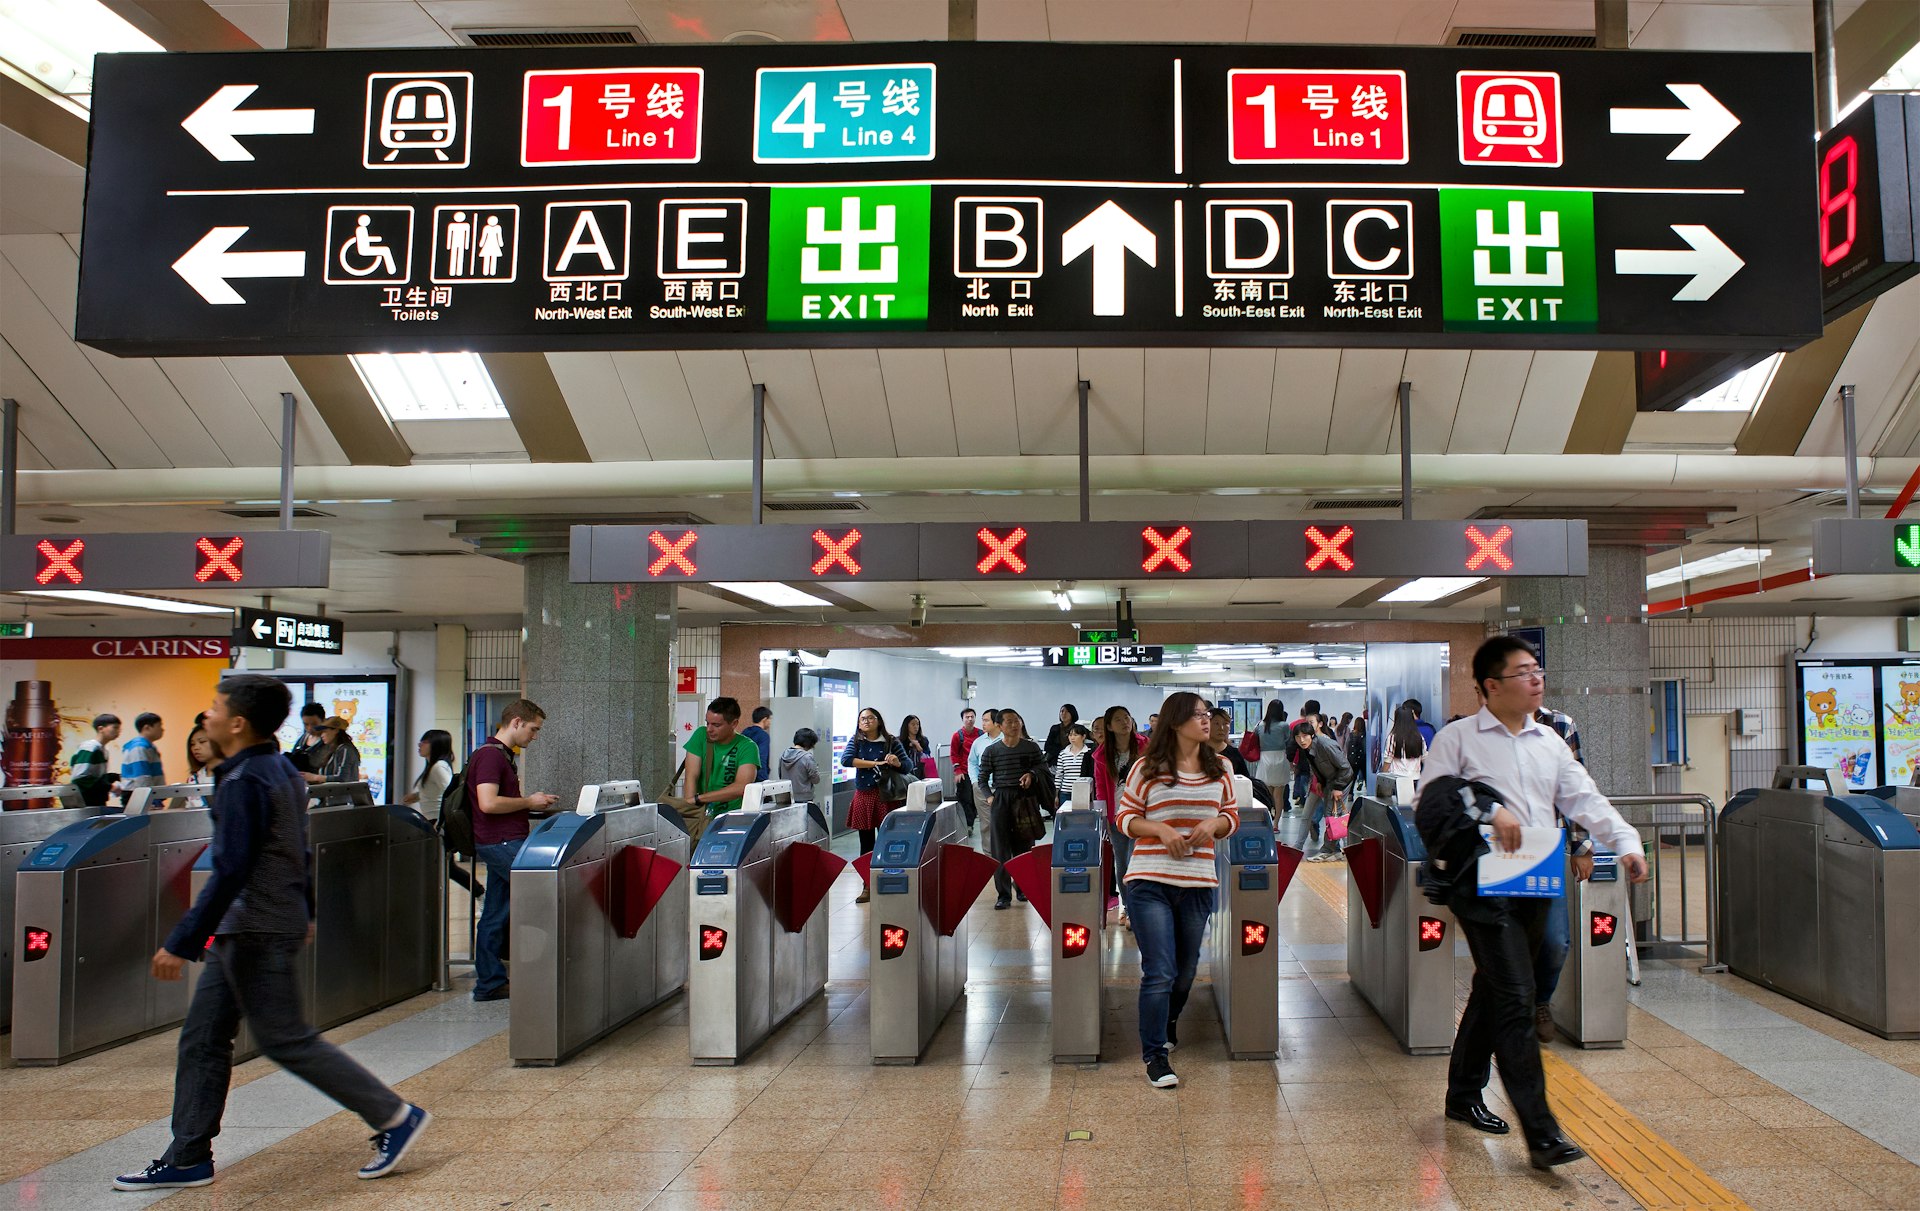 Passengers at a Beijing subway station